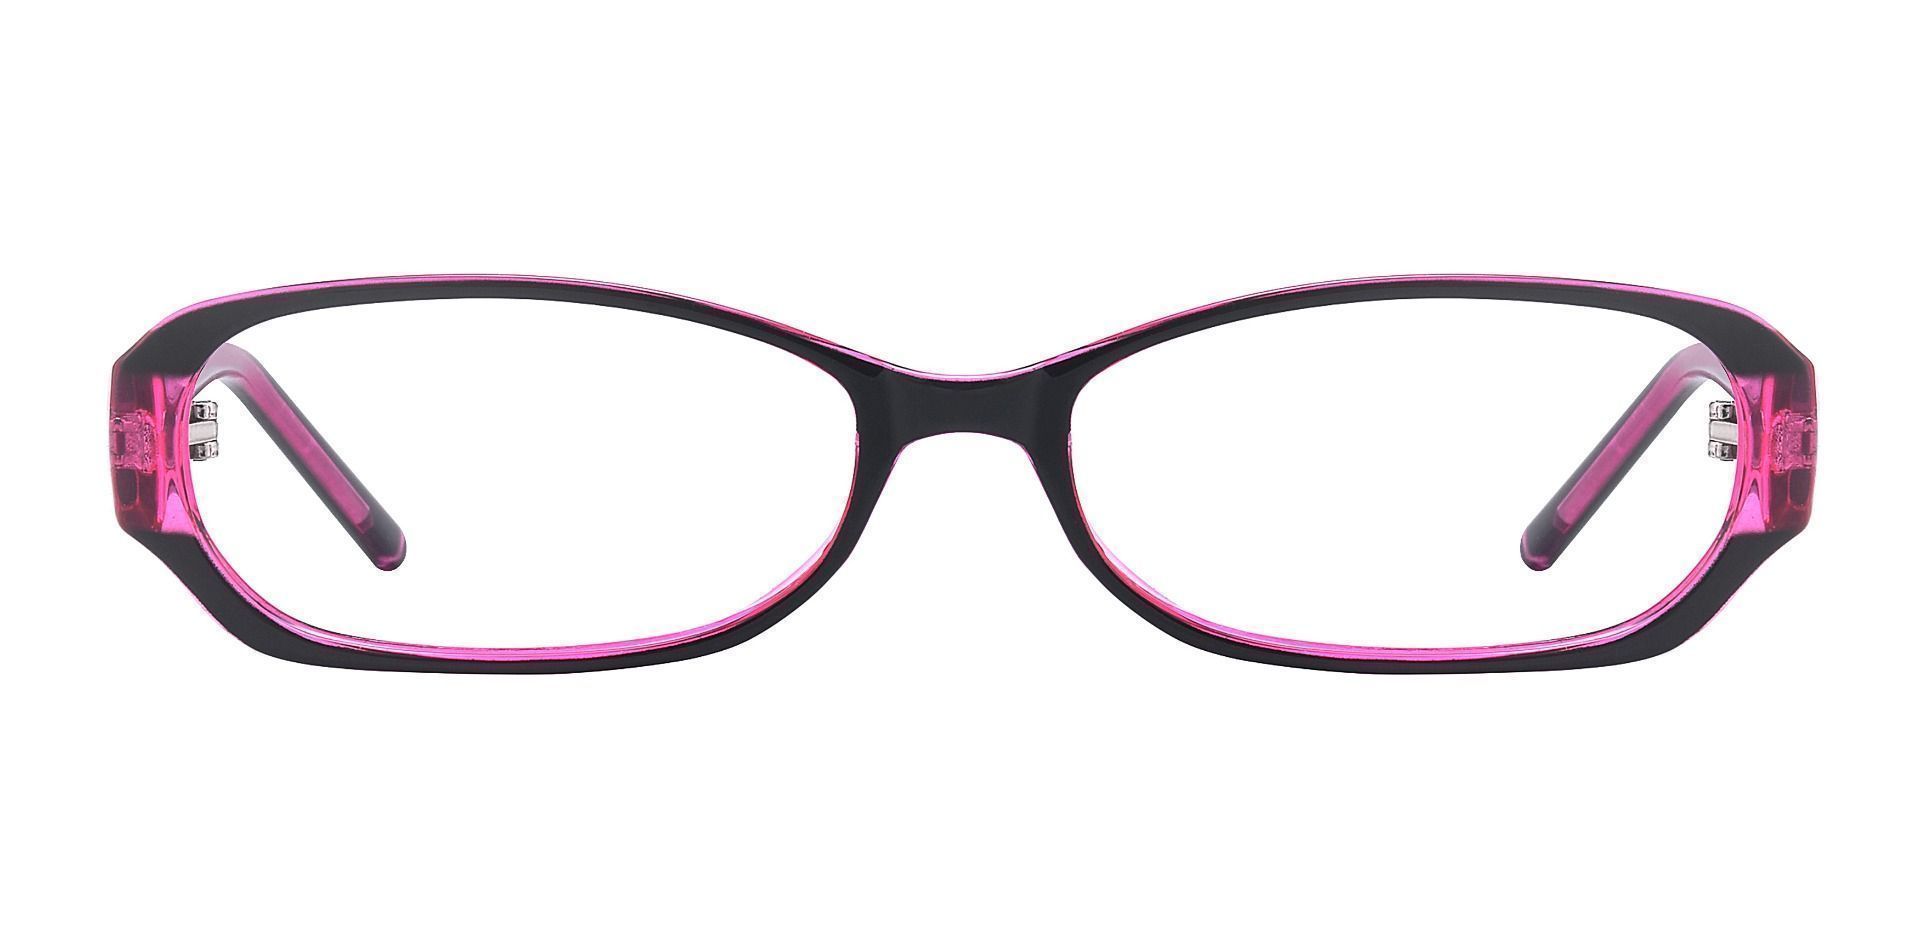 Nairobi Oval Single Vision Glasses - Purple